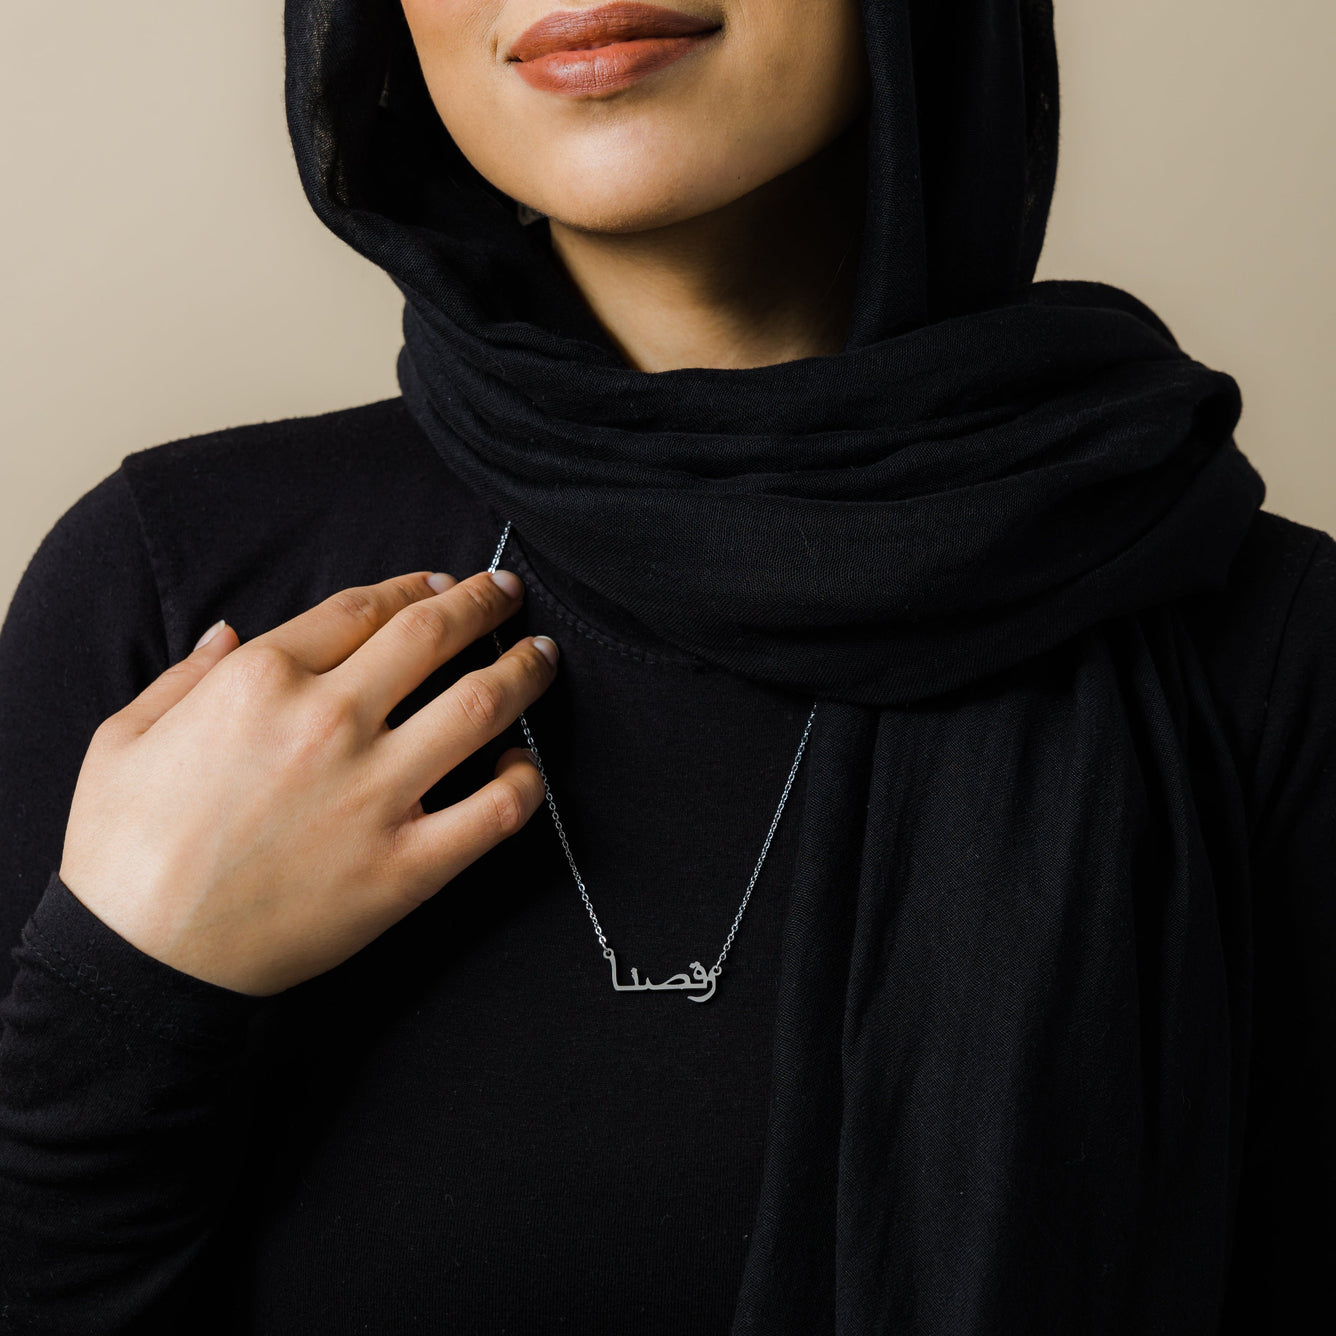 Arabic and Urdu Custom Name Necklace, Personalized Jewelry, Name Jewelry